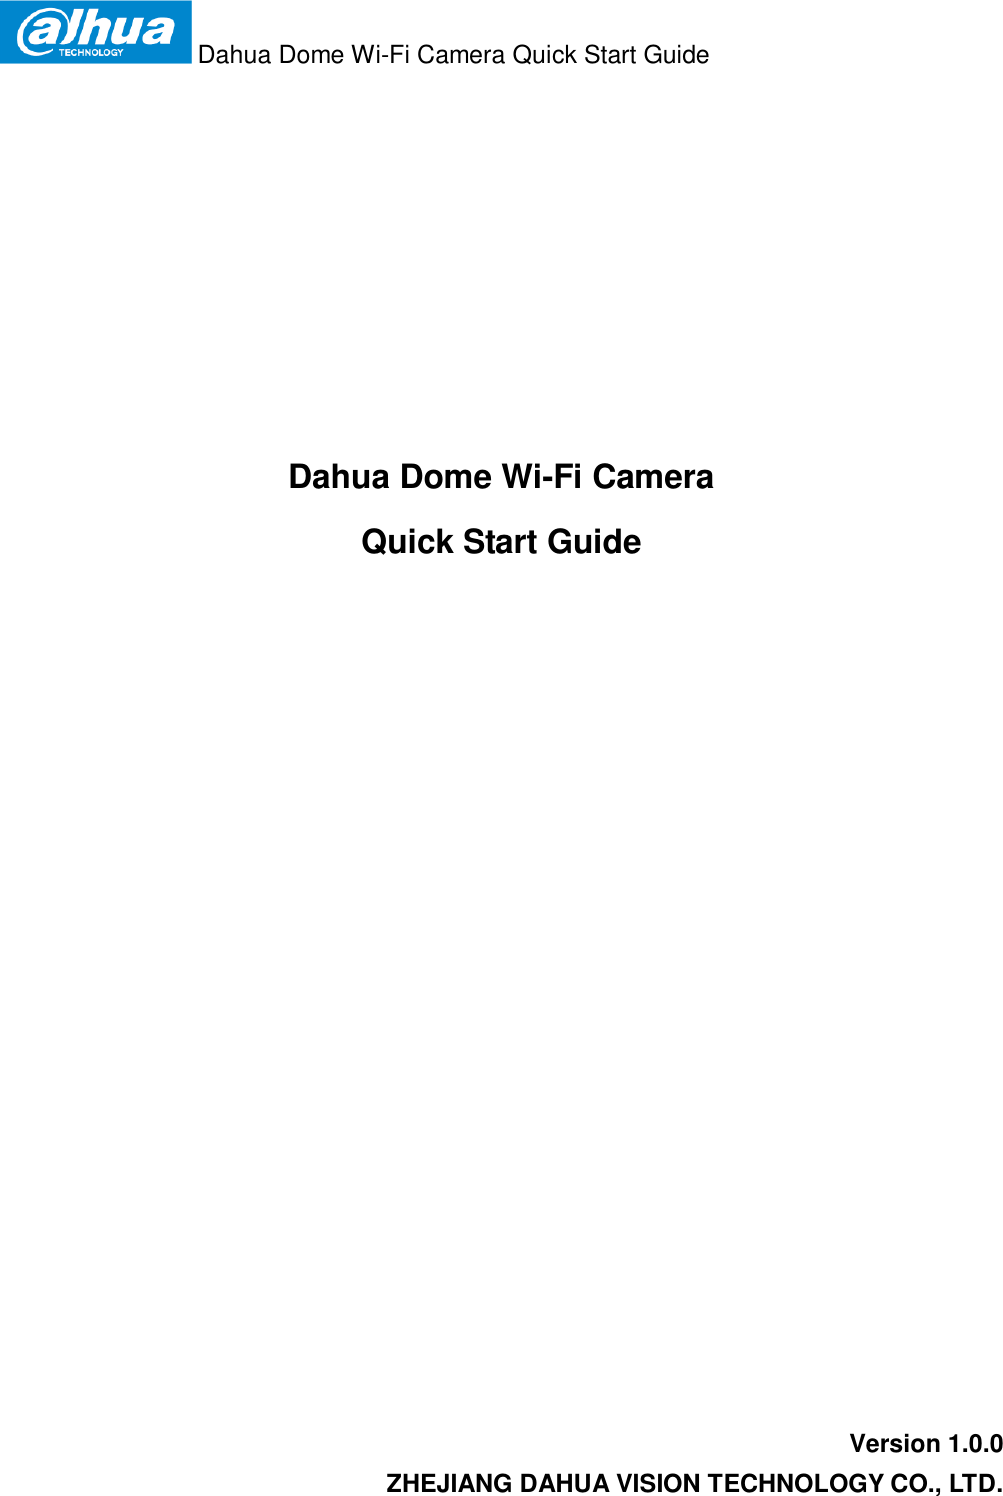  Dahua Dome Wi-Fi Camera Quick Start Guide   Dahua Dome Wi-Fi Camera  Quick Start Guide  Version 1.0.0 ZHEJIANG DAHUA VISION TECHNOLOGY CO., LTD. 